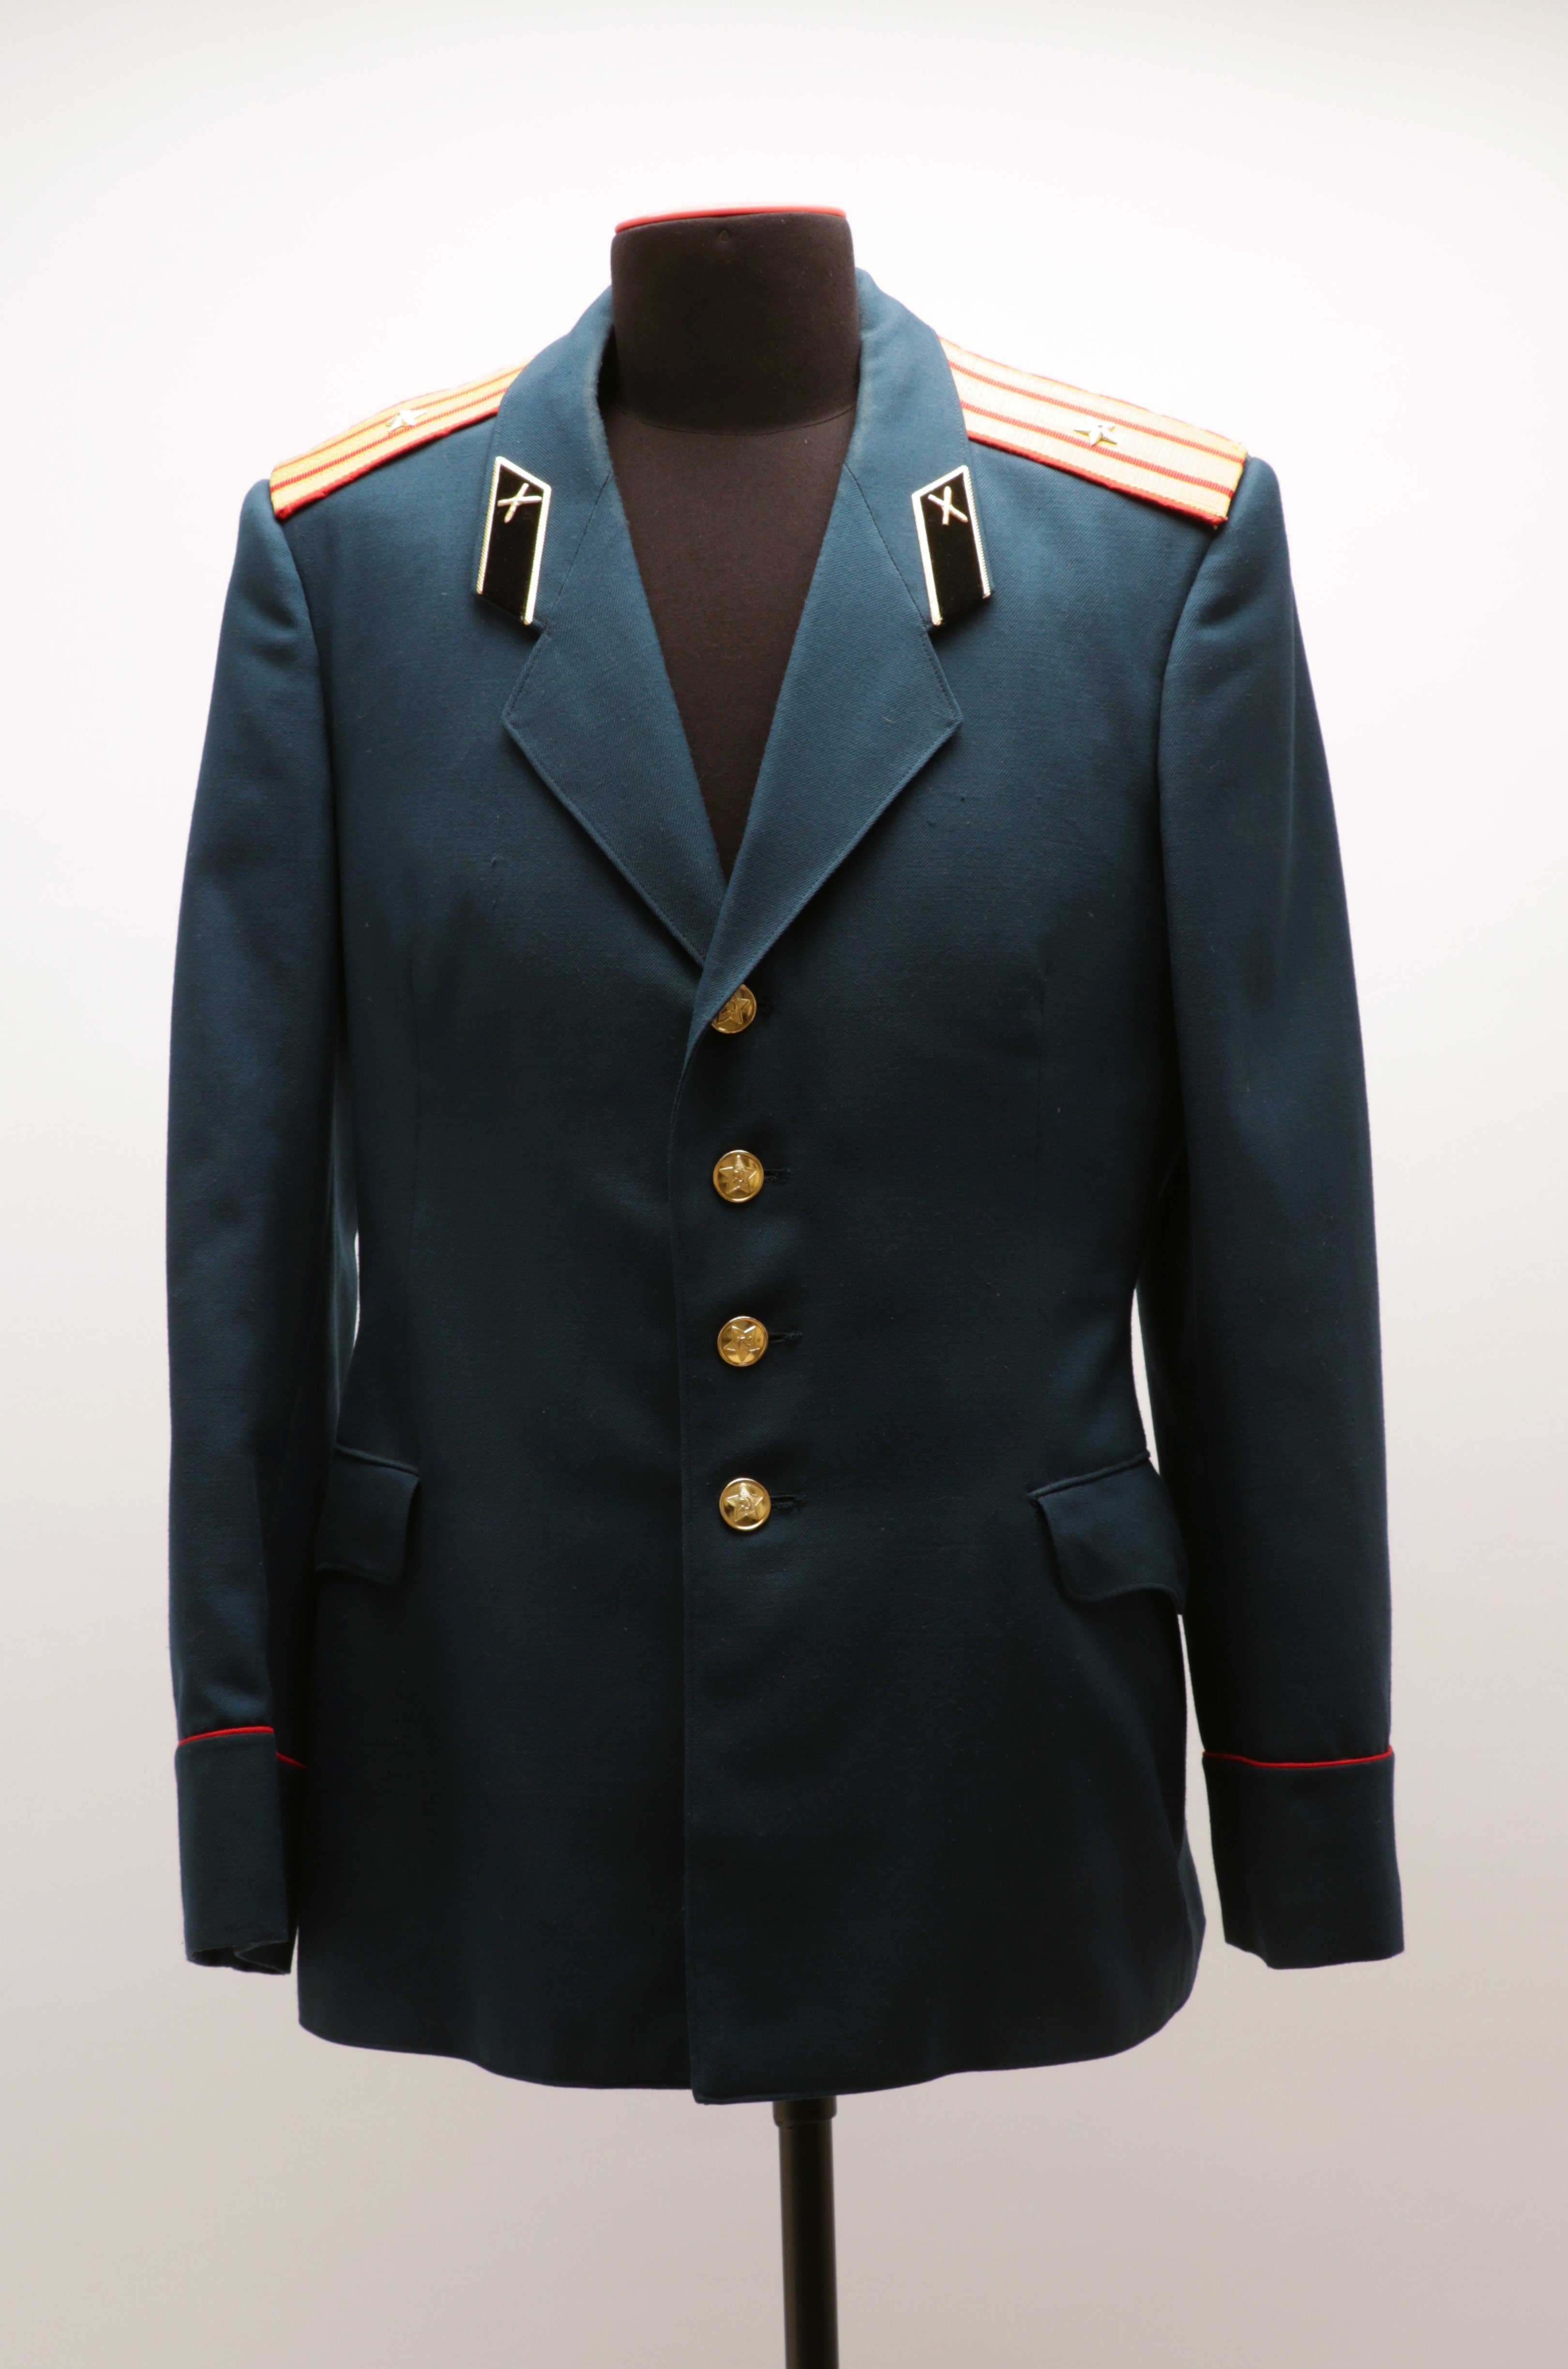 Jacke der Paradeuniform eines Artillerie-Majors der Sowjetarmee, Sowjetunion, nach 1969 (Museum Berlin-Karlshorst CC BY-NC-SA)